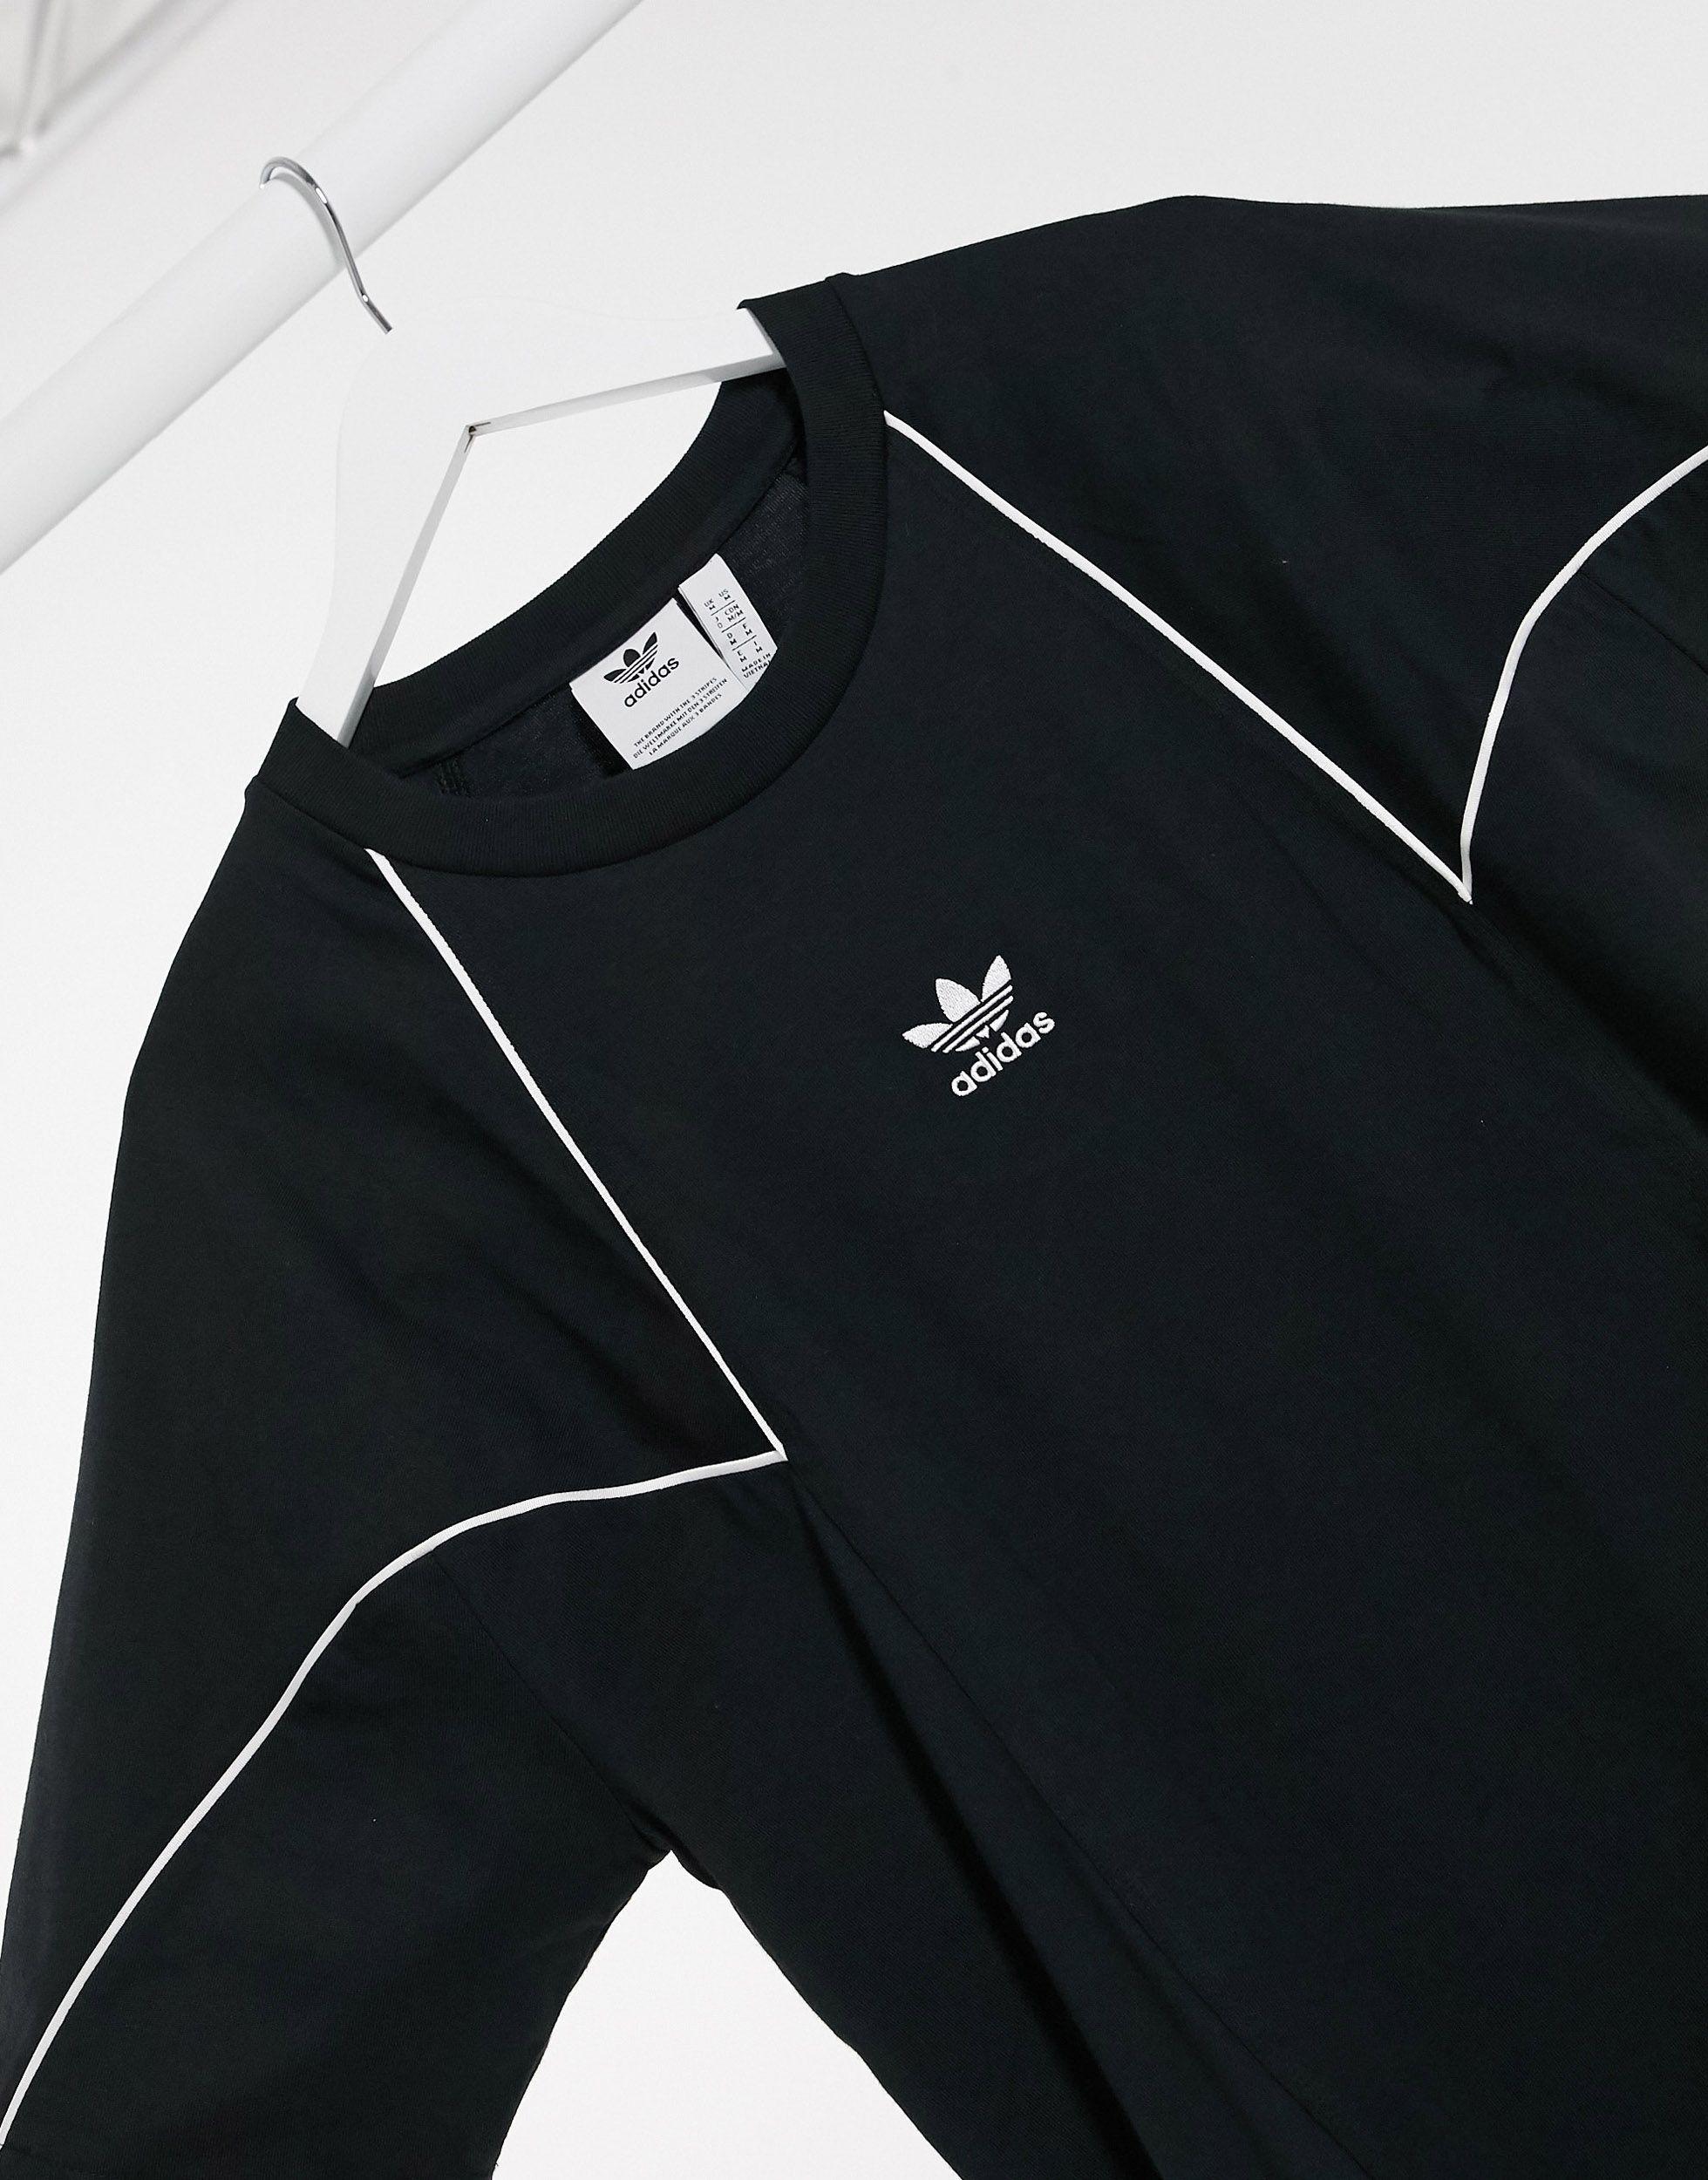 Adidas Originals Premium T Shirt Netherlands, SAVE 55% - mpgc.net